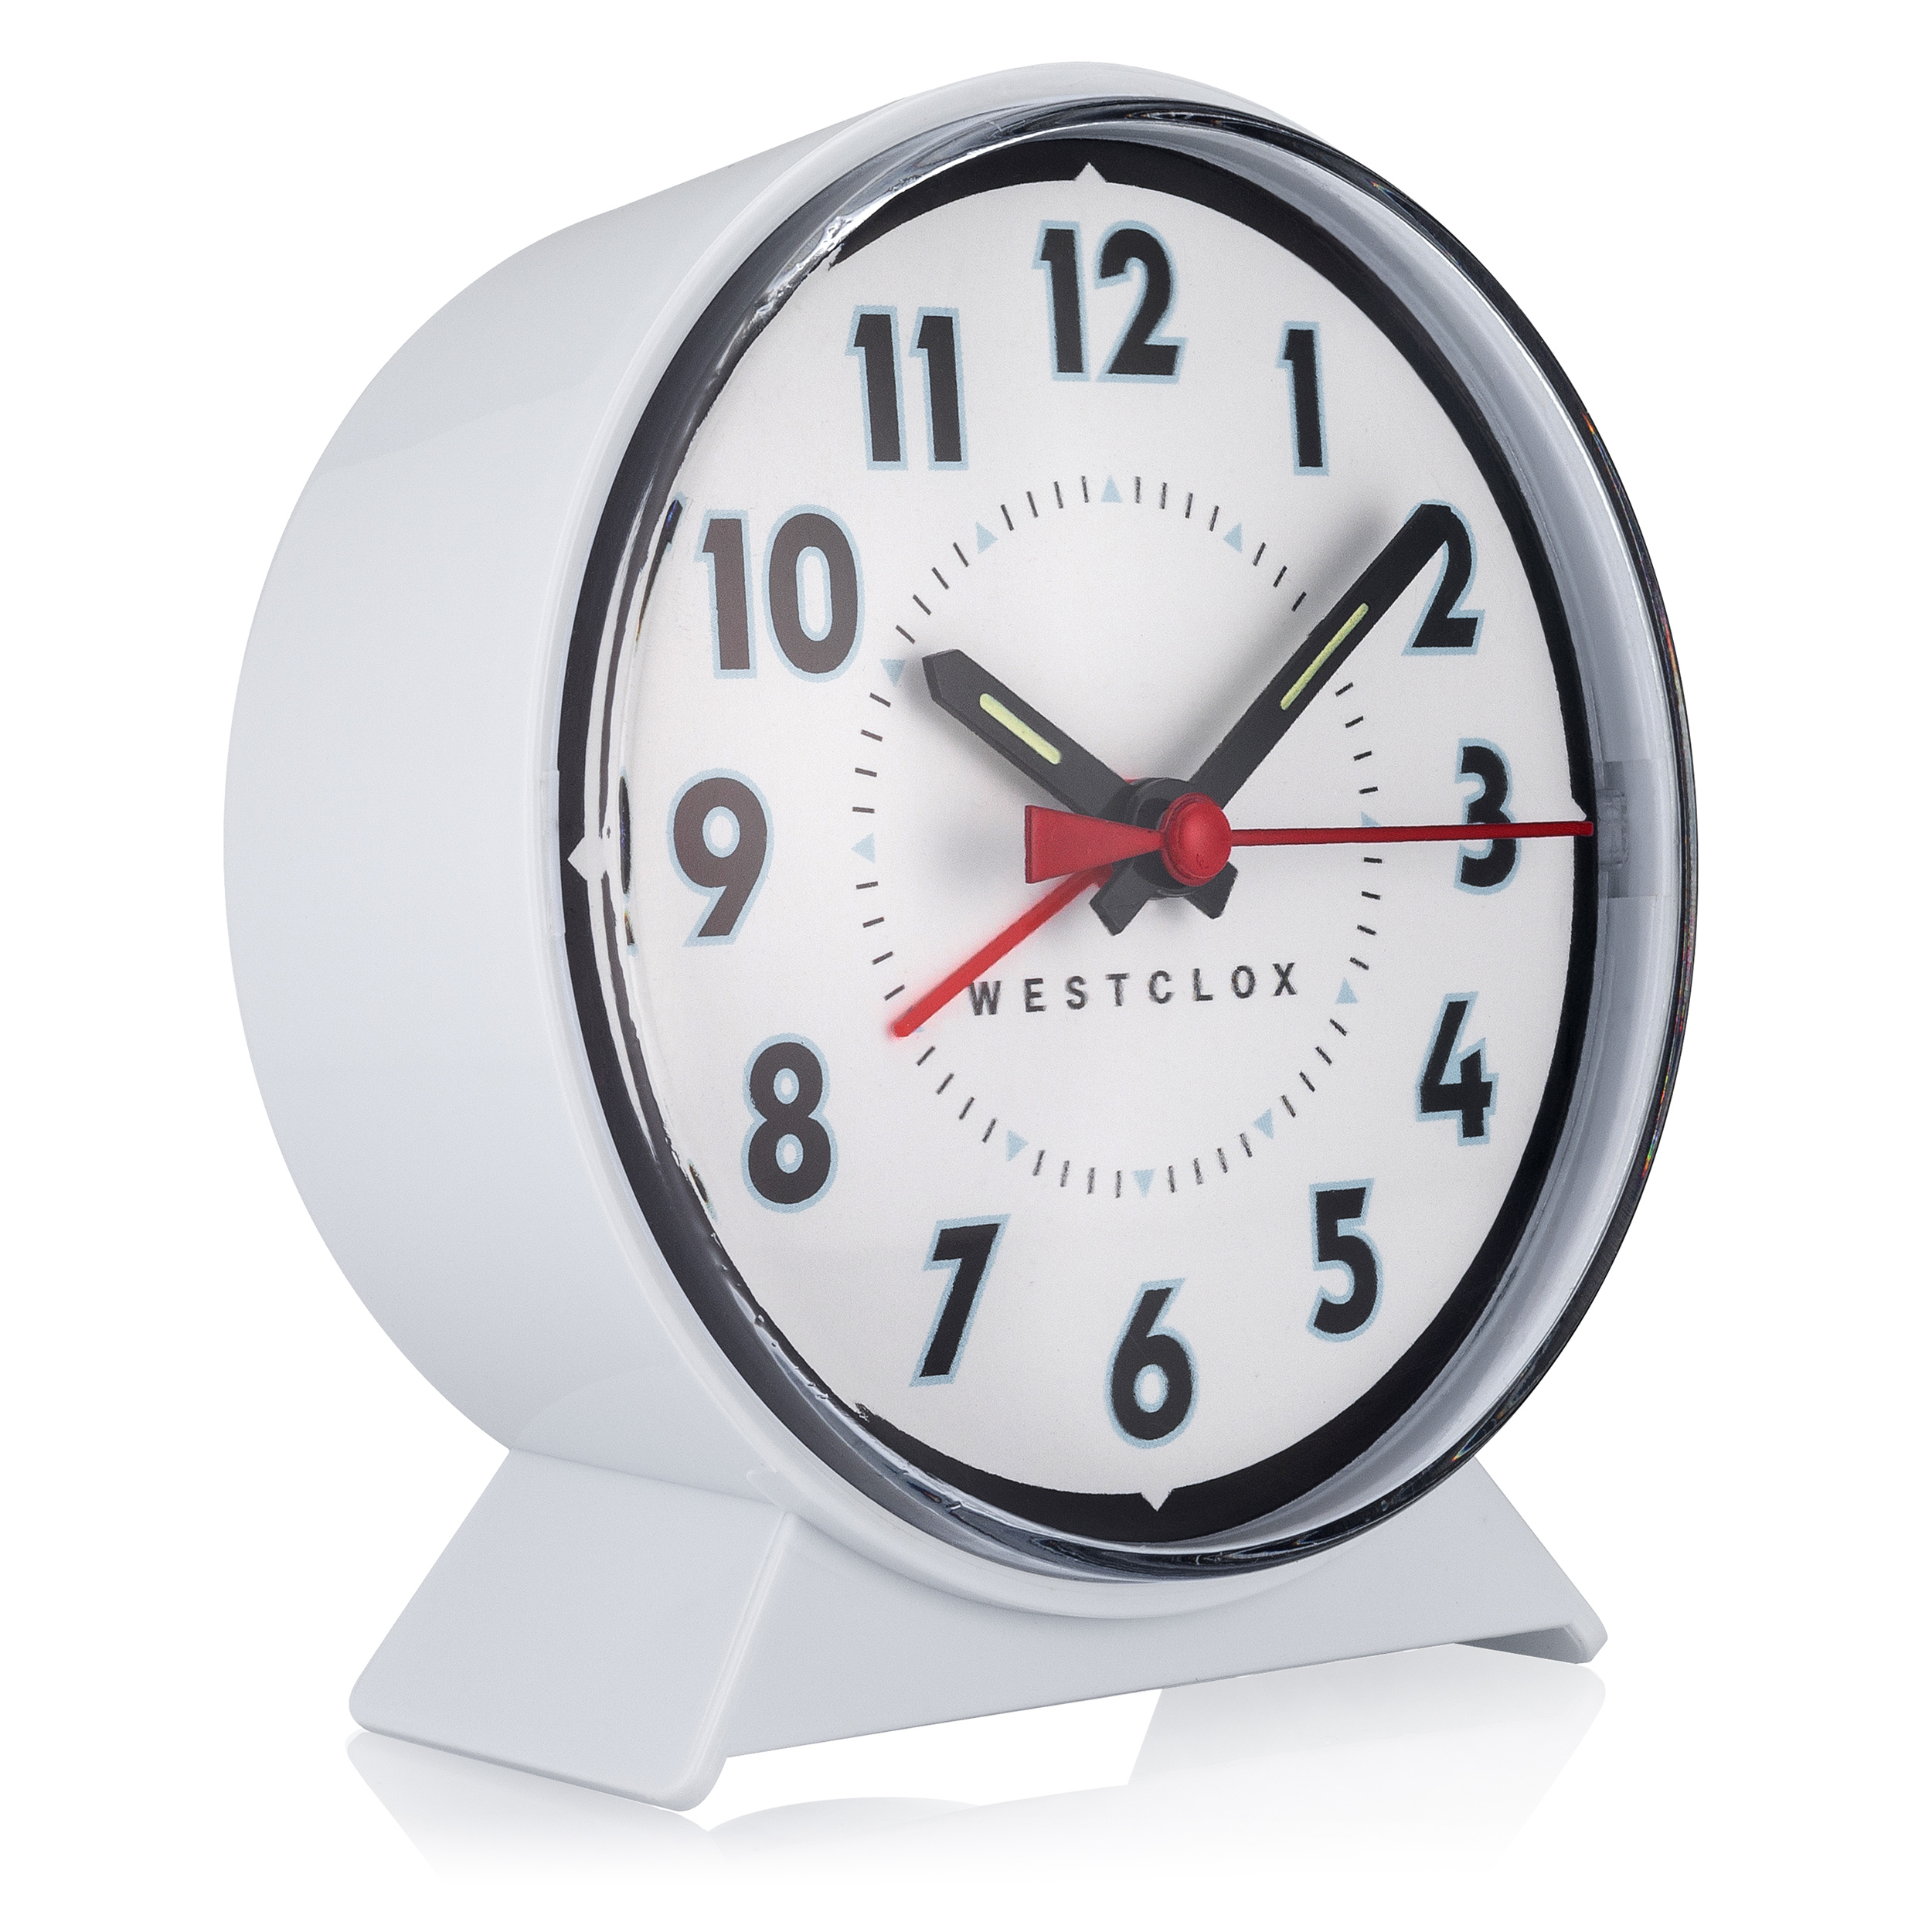 Westclox Retro Style Analog Mechanical Keywound Bedside or Desk Alarm Clock - White Dial - image 1 of 4